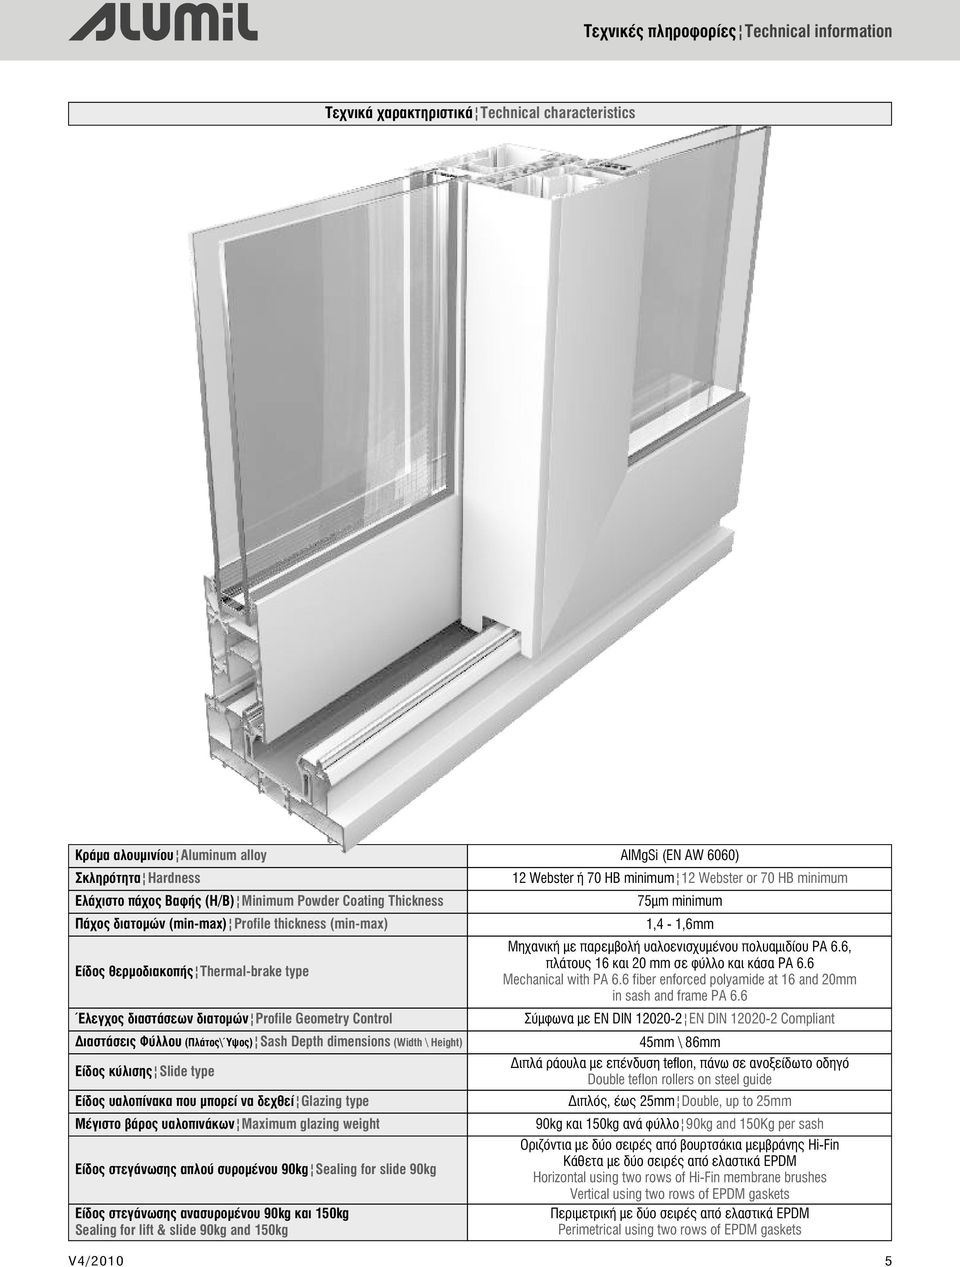 dimensions (Width \ Height) Είδος κύλισης Slide type Είδος υαλοπίνακα που μπορεί να δεχθεί Glazing type Μέγιστο βάρος υαλοπινάκων Maximum glazing weight Είδος στεγάνωσης απλού συρομένου 90kg Sealing